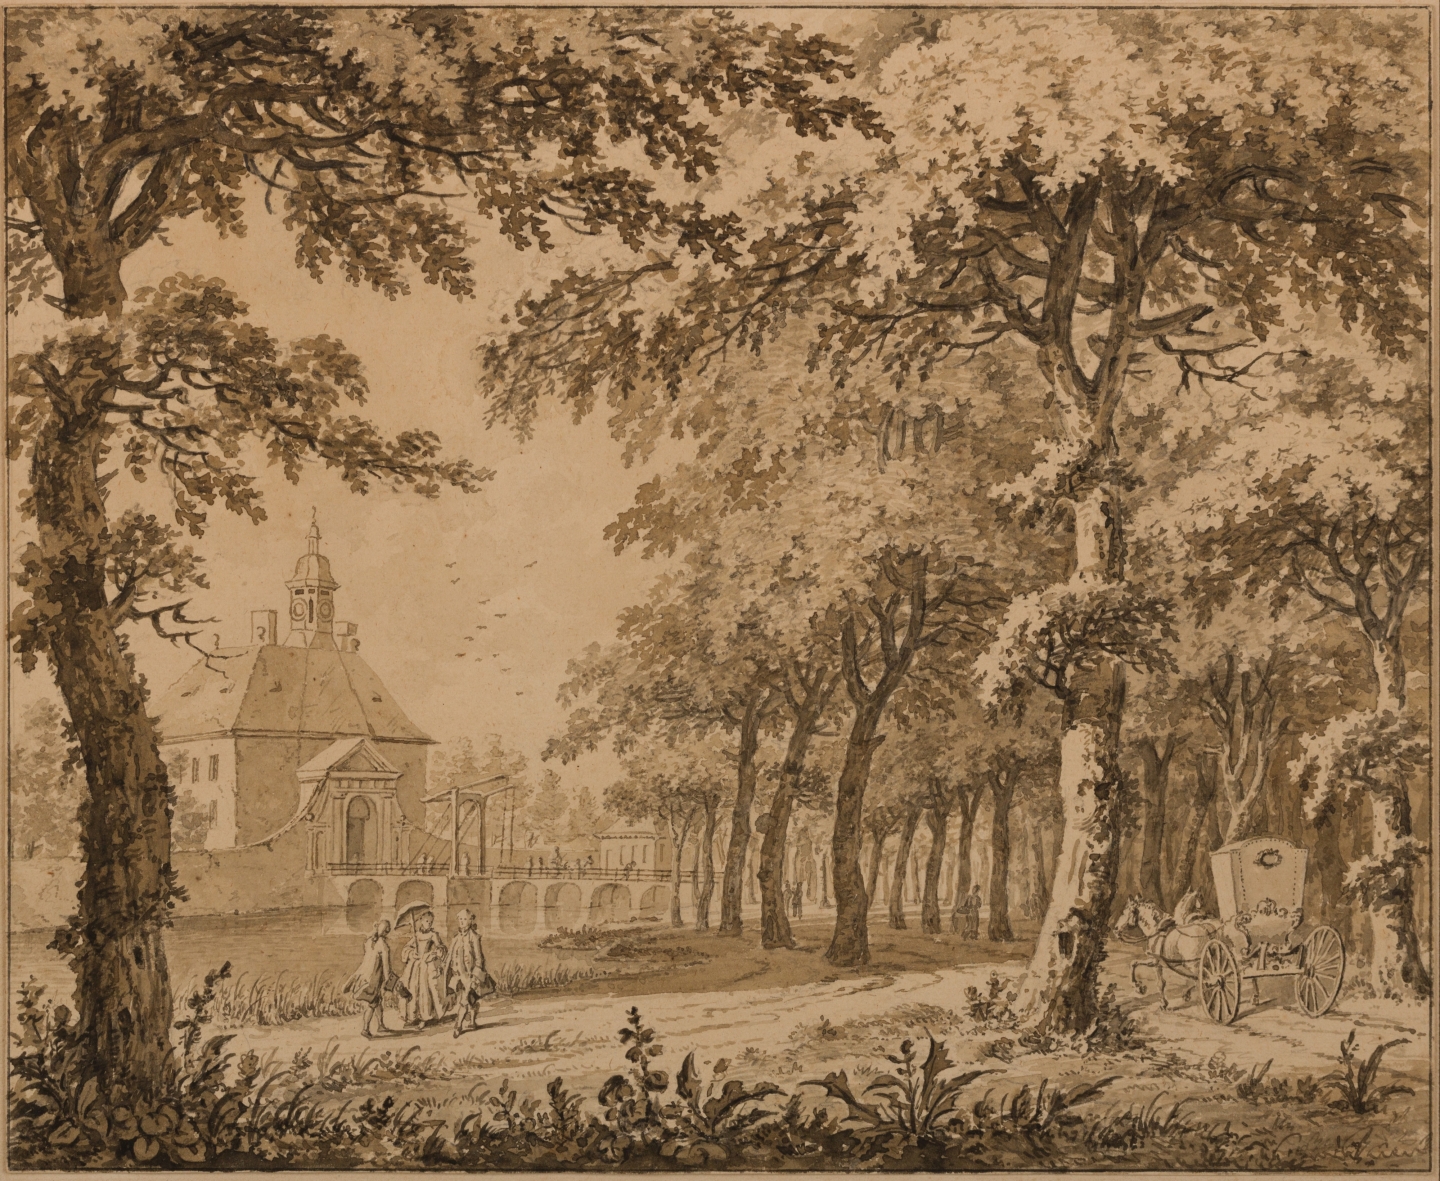 Johann Goll van Franckenstein (Frankfurt an Main, 1722-Velsen, 1785) Muiderpoort of Amsterdam, seen from The Schans, 1765